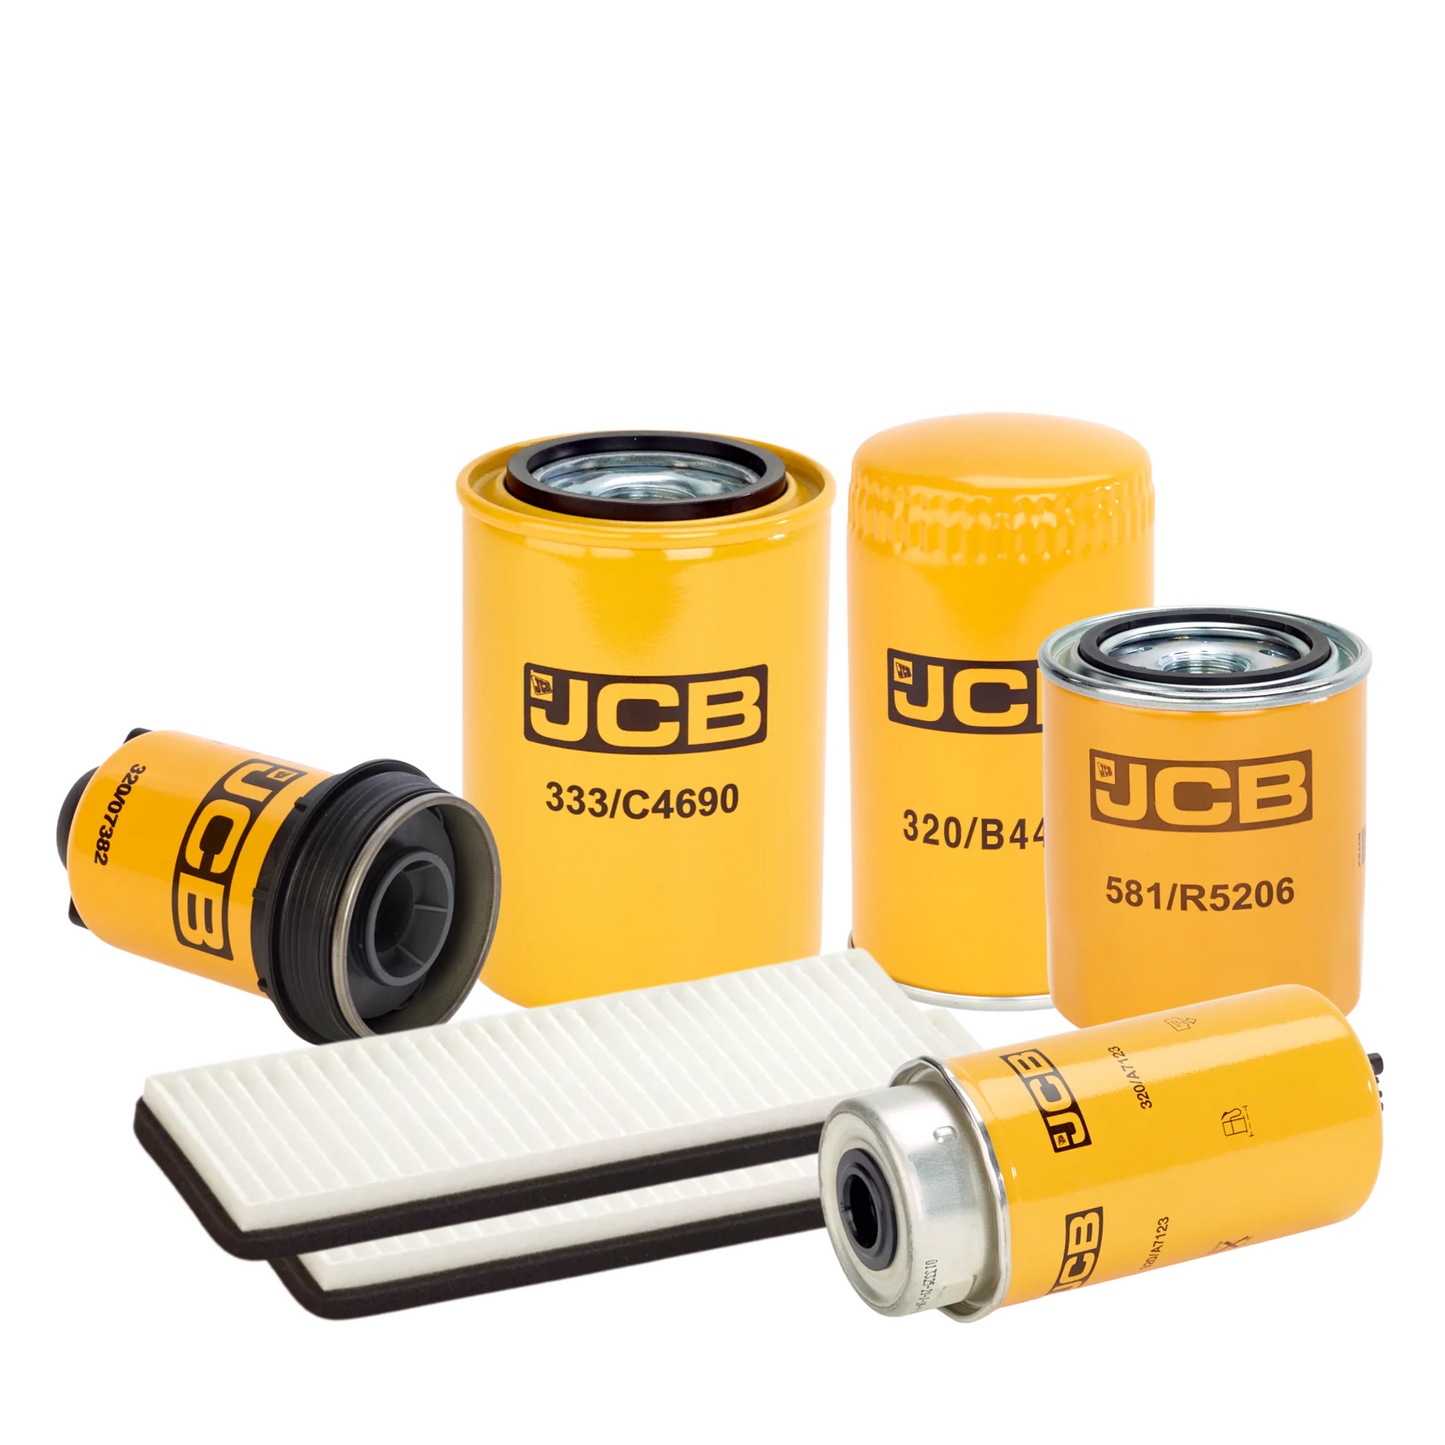 JCB 531-70 7500 Hour Filter Service Kit